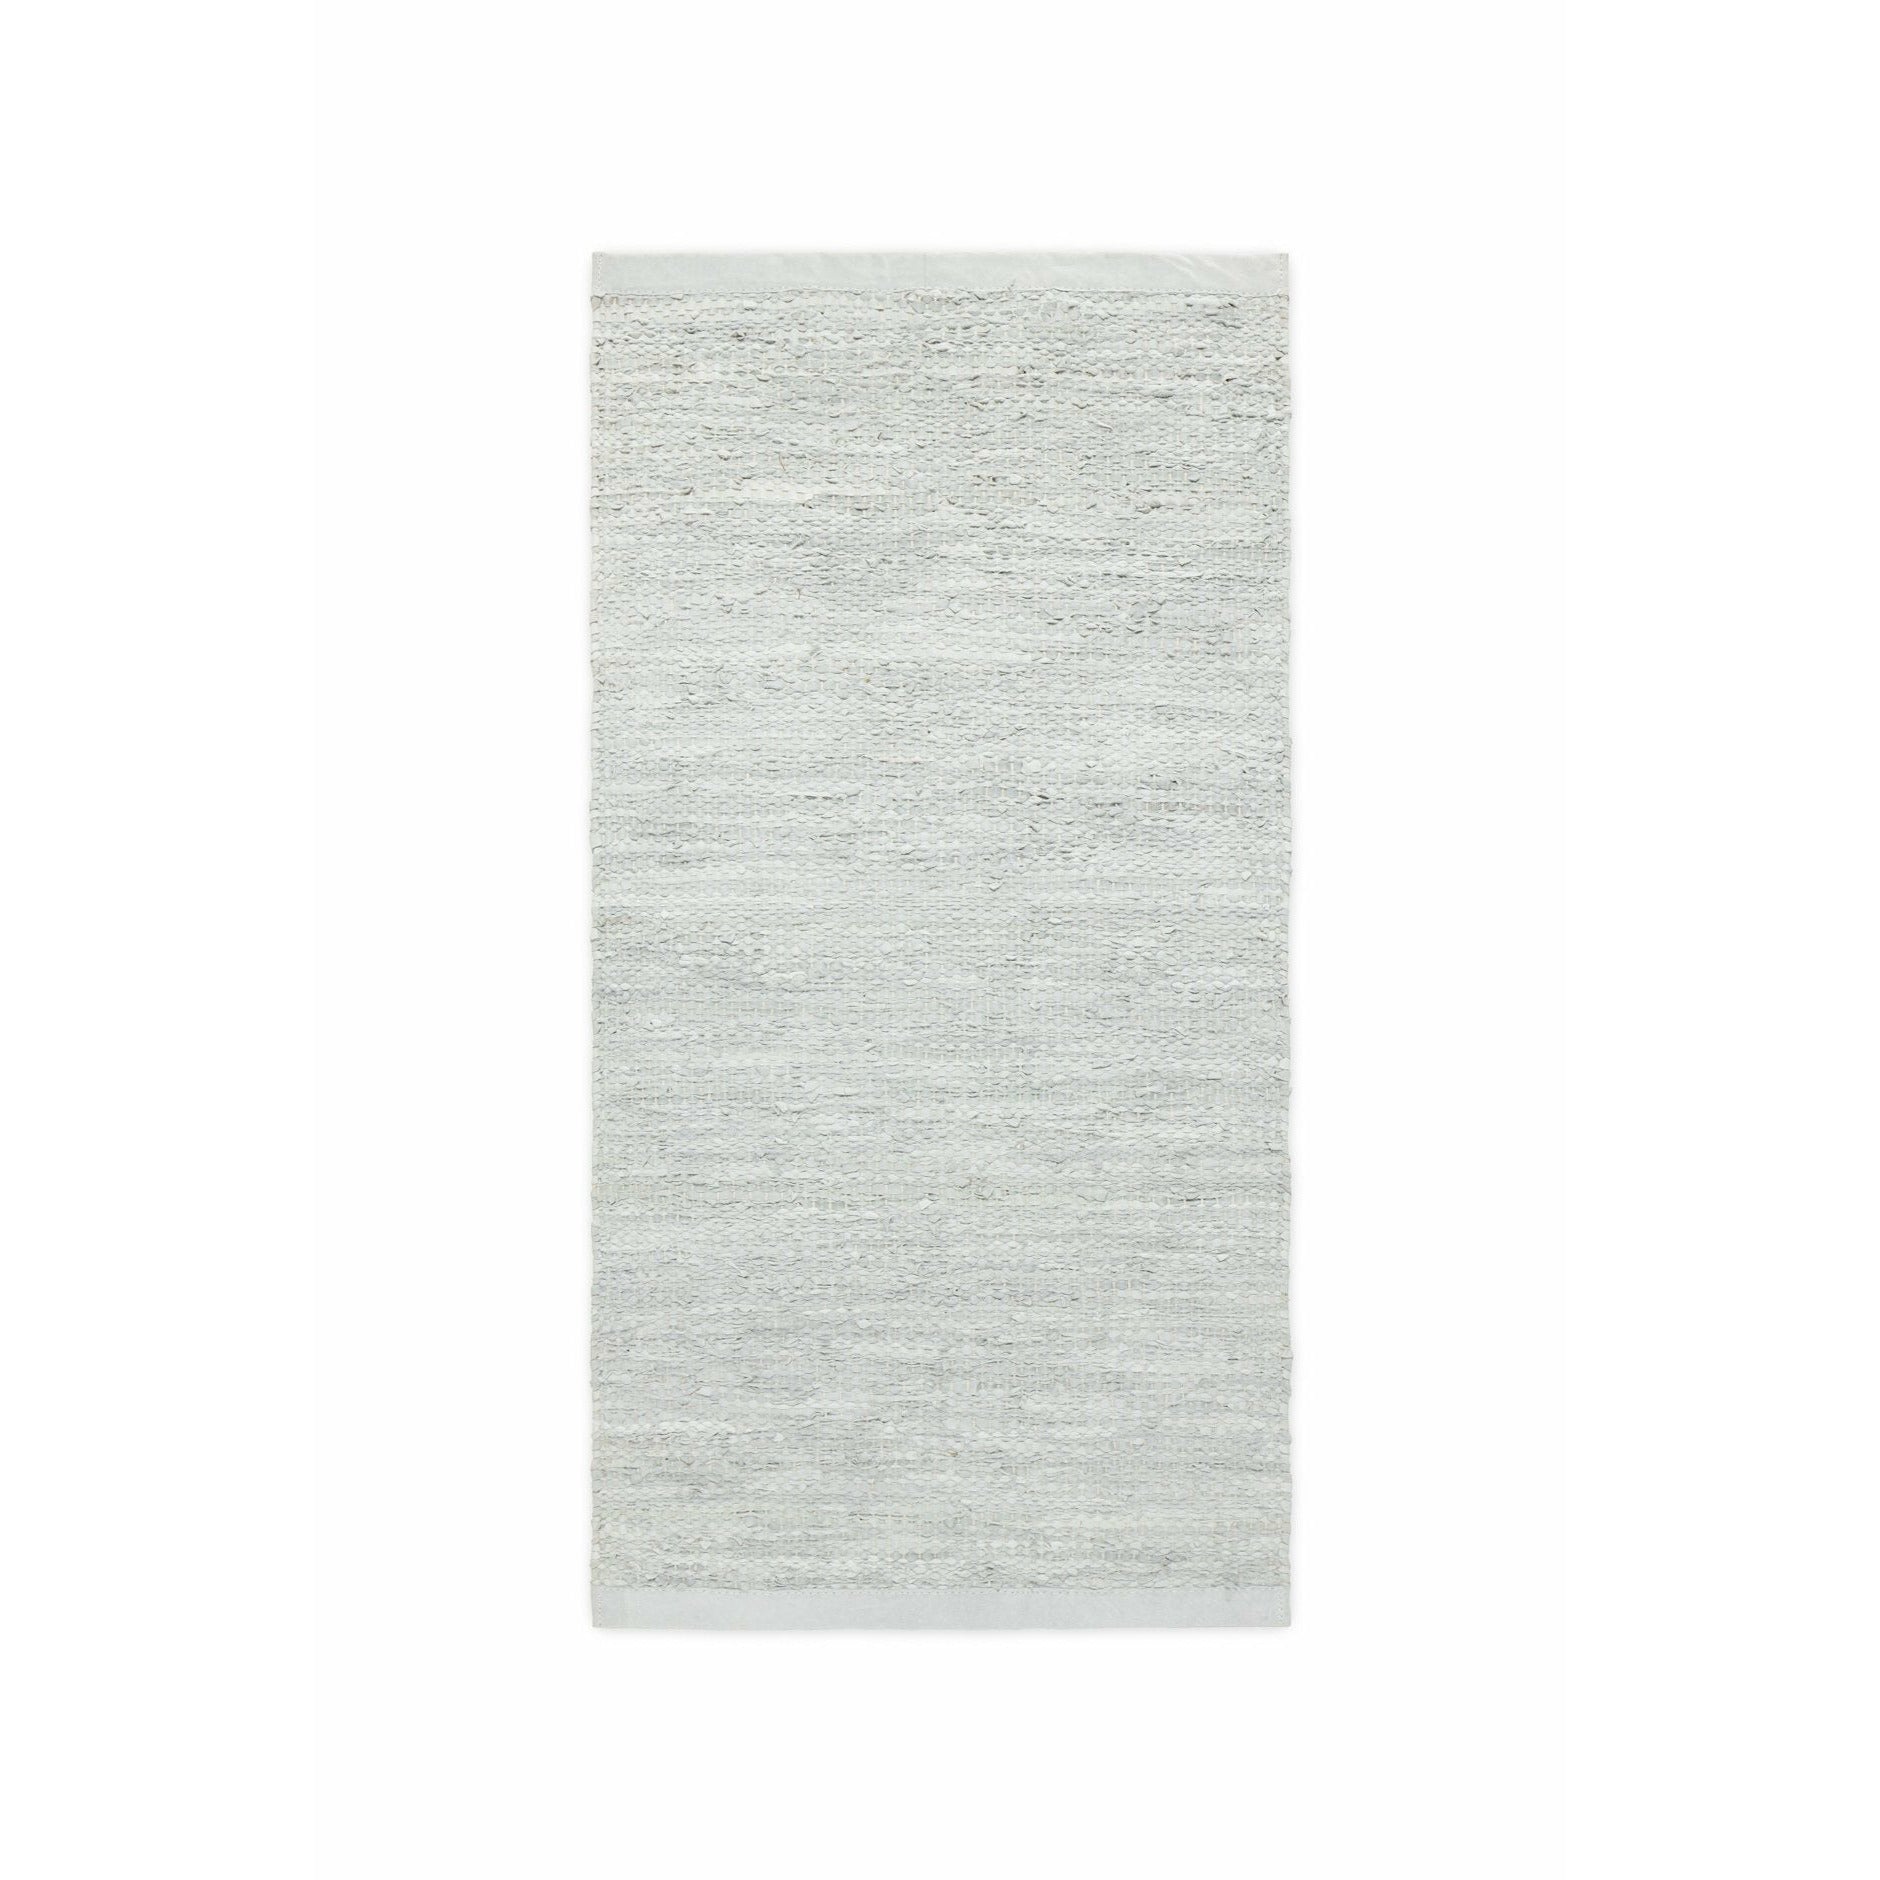 Teppet solid skinn tepp kalkstein, 200 x 300 cm